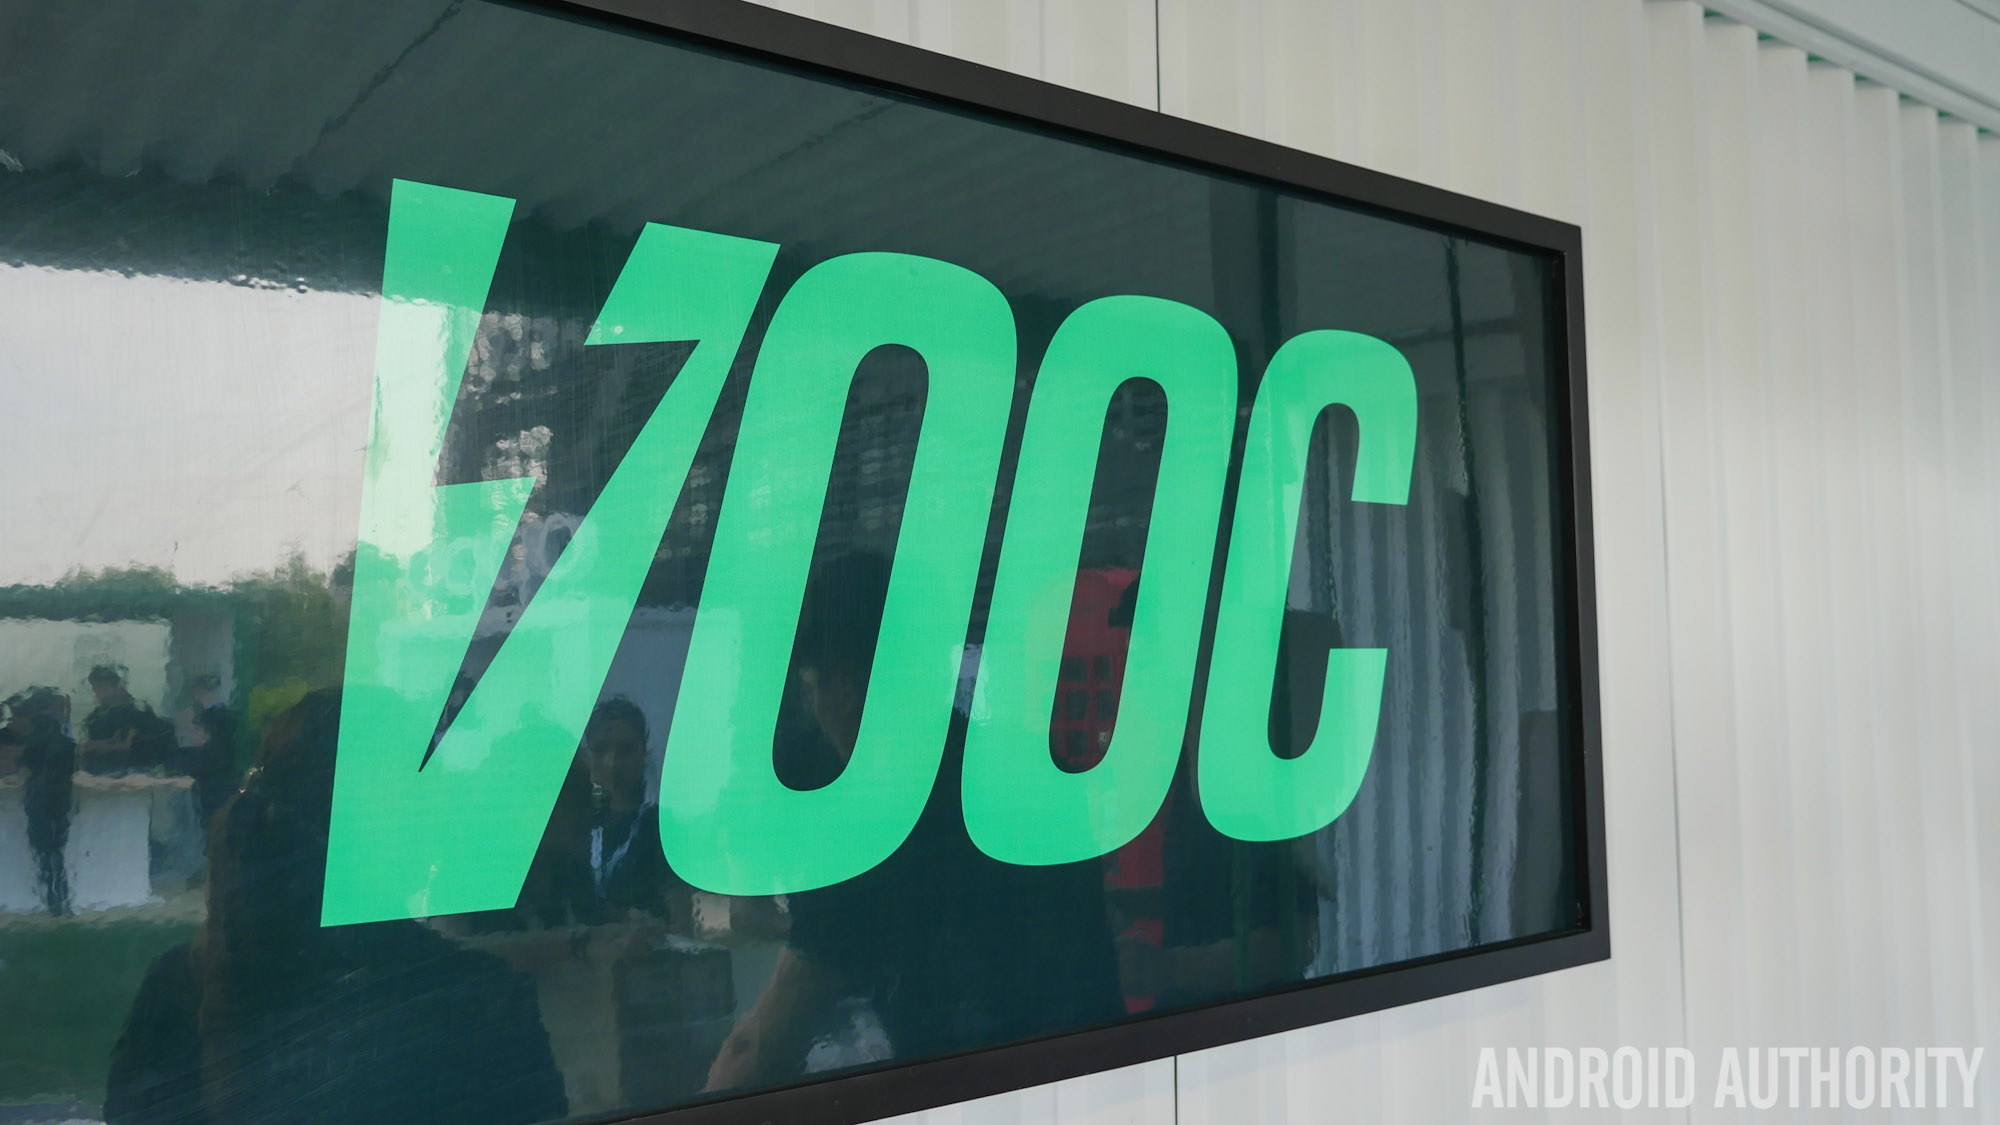 VOOC logo on display